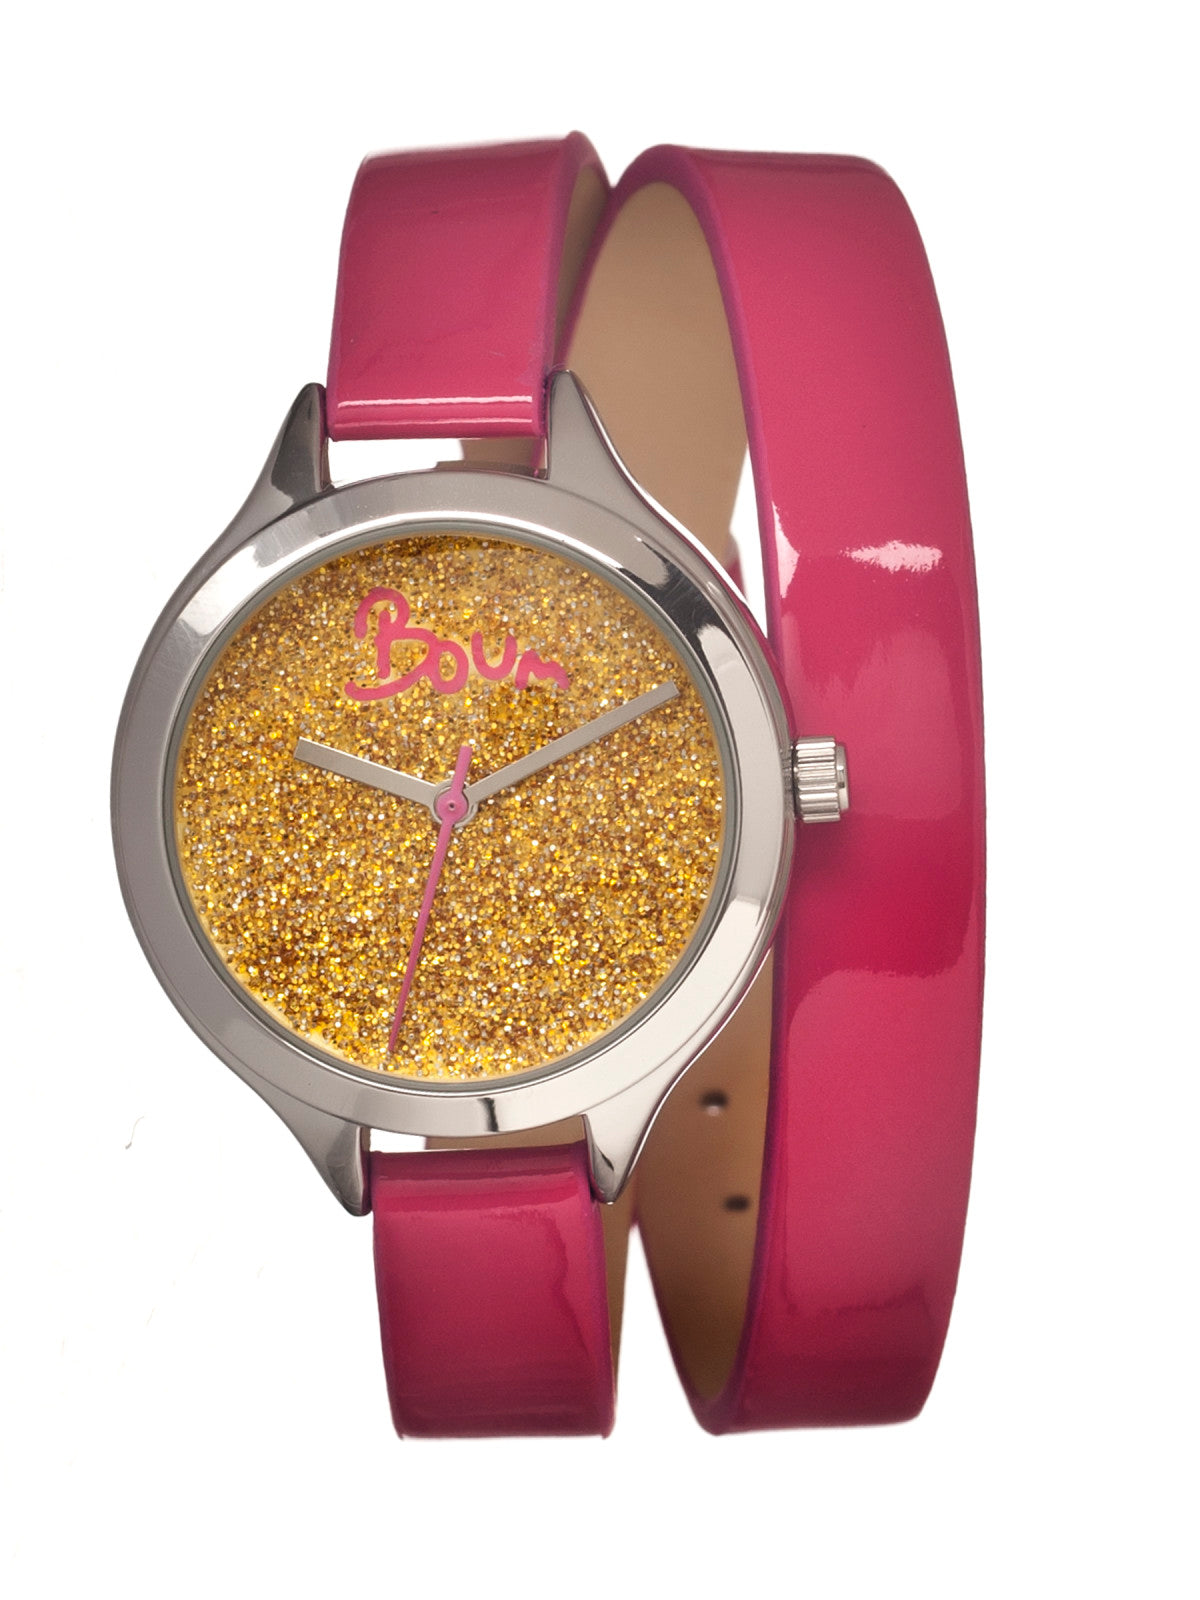 Boum Confetti Glitter-Dial Dual-Wrap Ladies Watch - Hot Pink - BOUBM1201